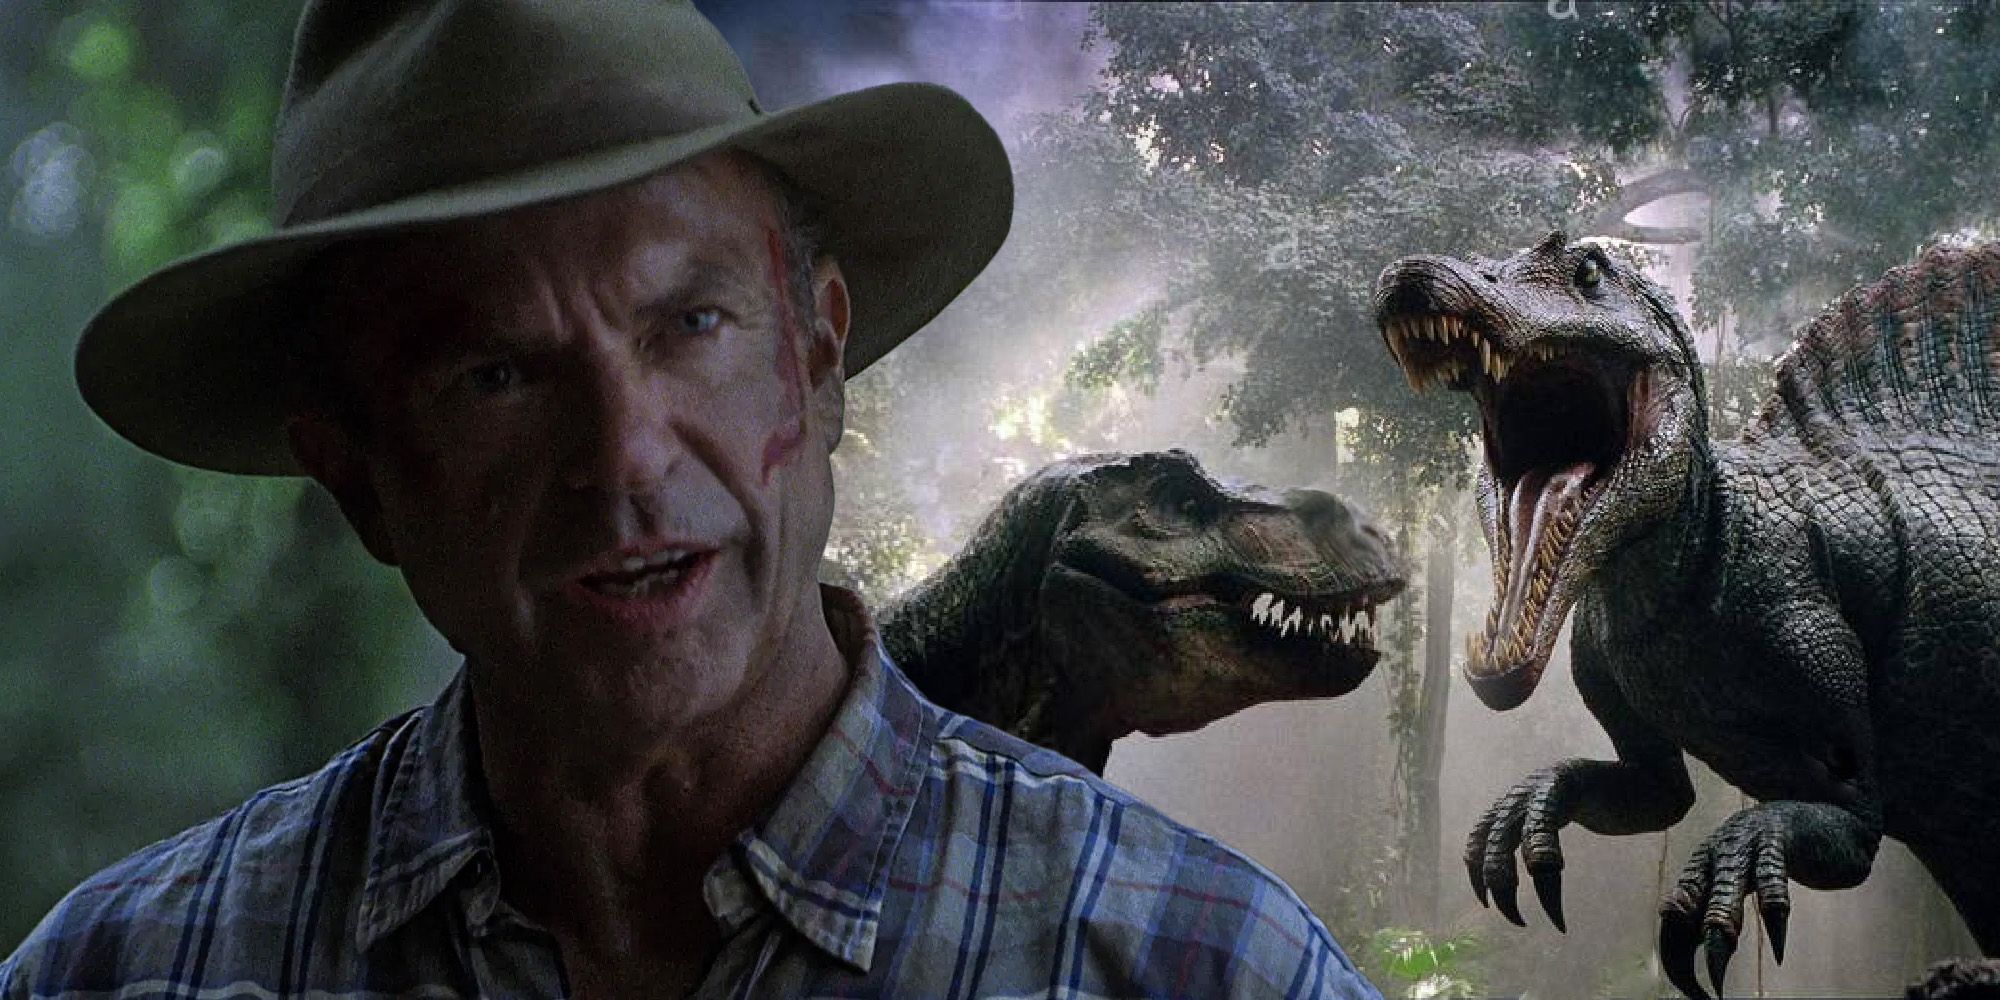 Jurassic Park Spinosaurus Scene